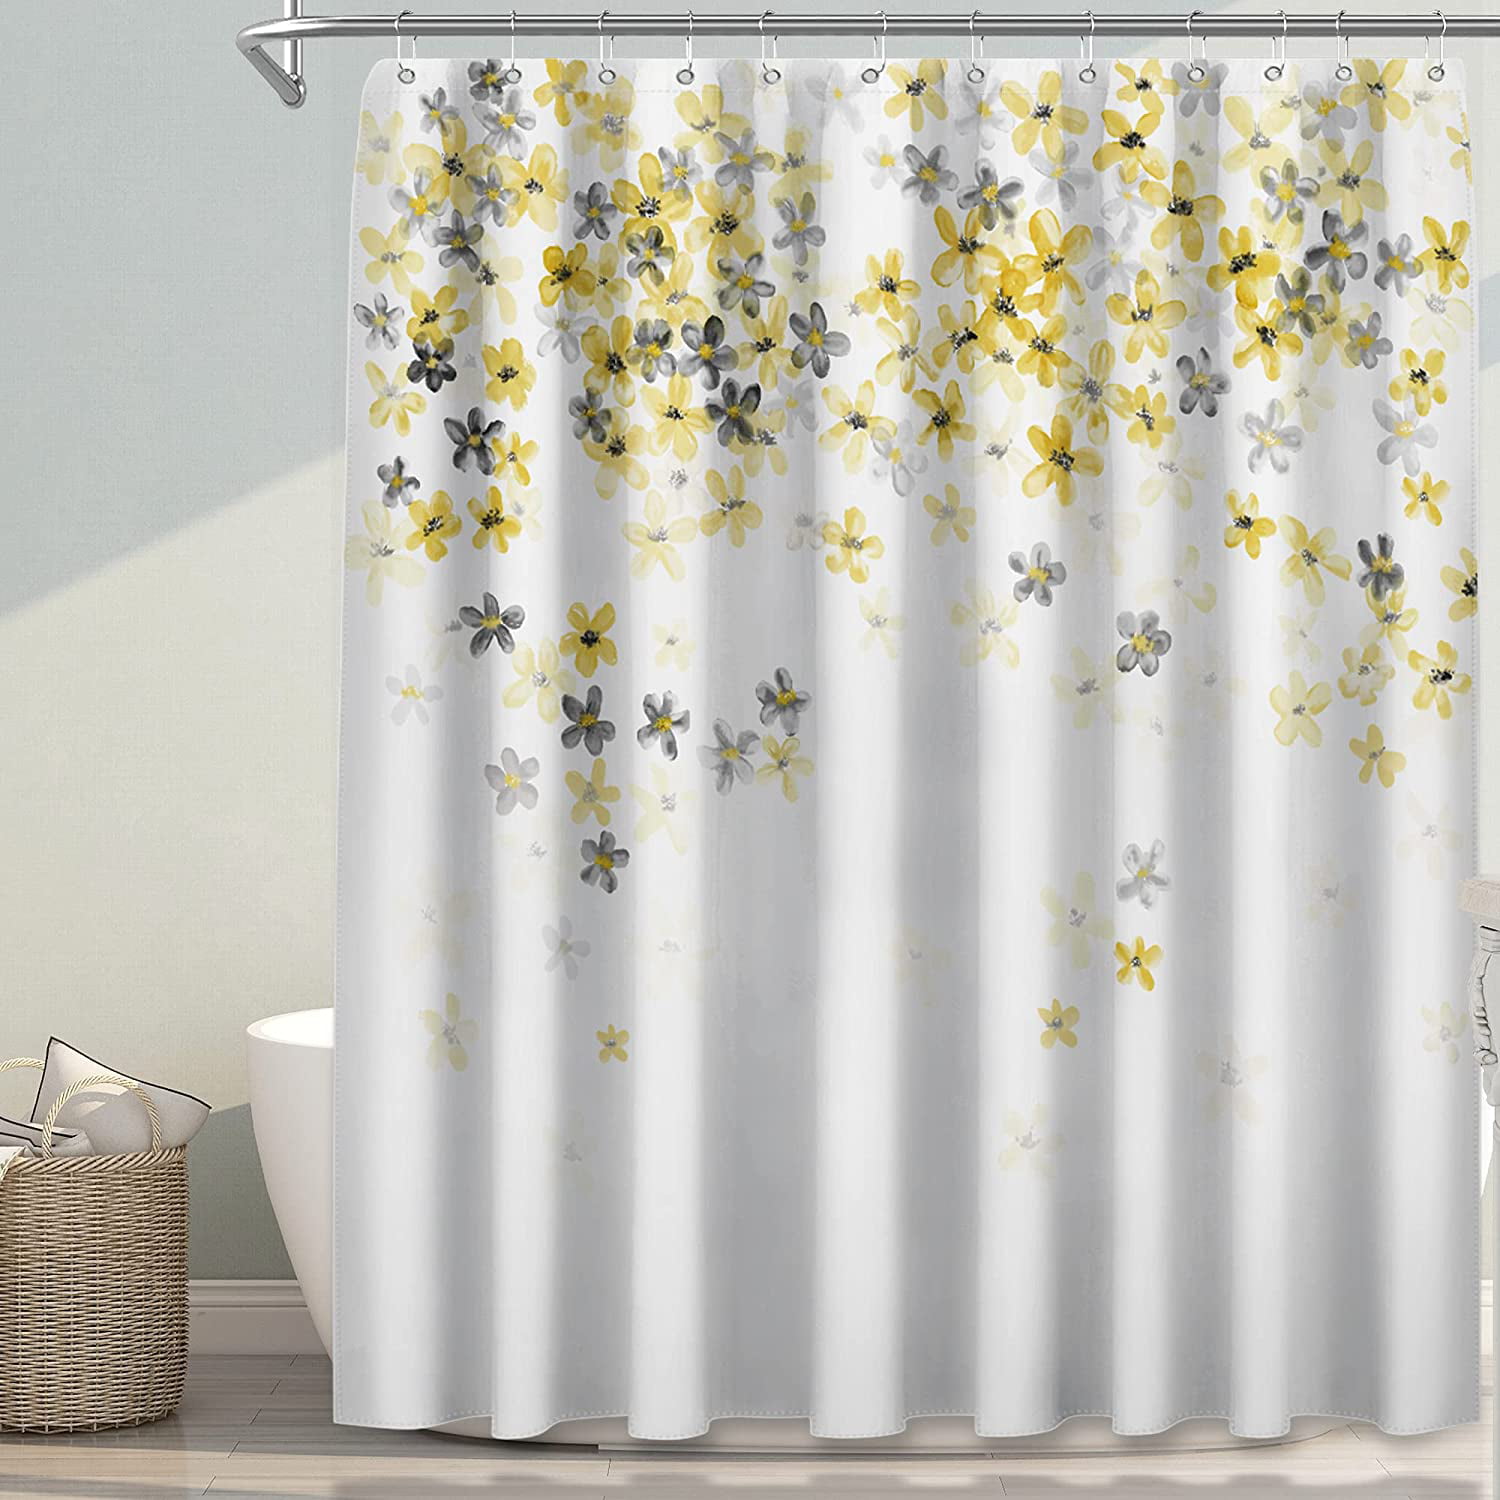 Bathroom Curtain Octopus S, Bed Bath And Beyond Nautical Shower Curtain